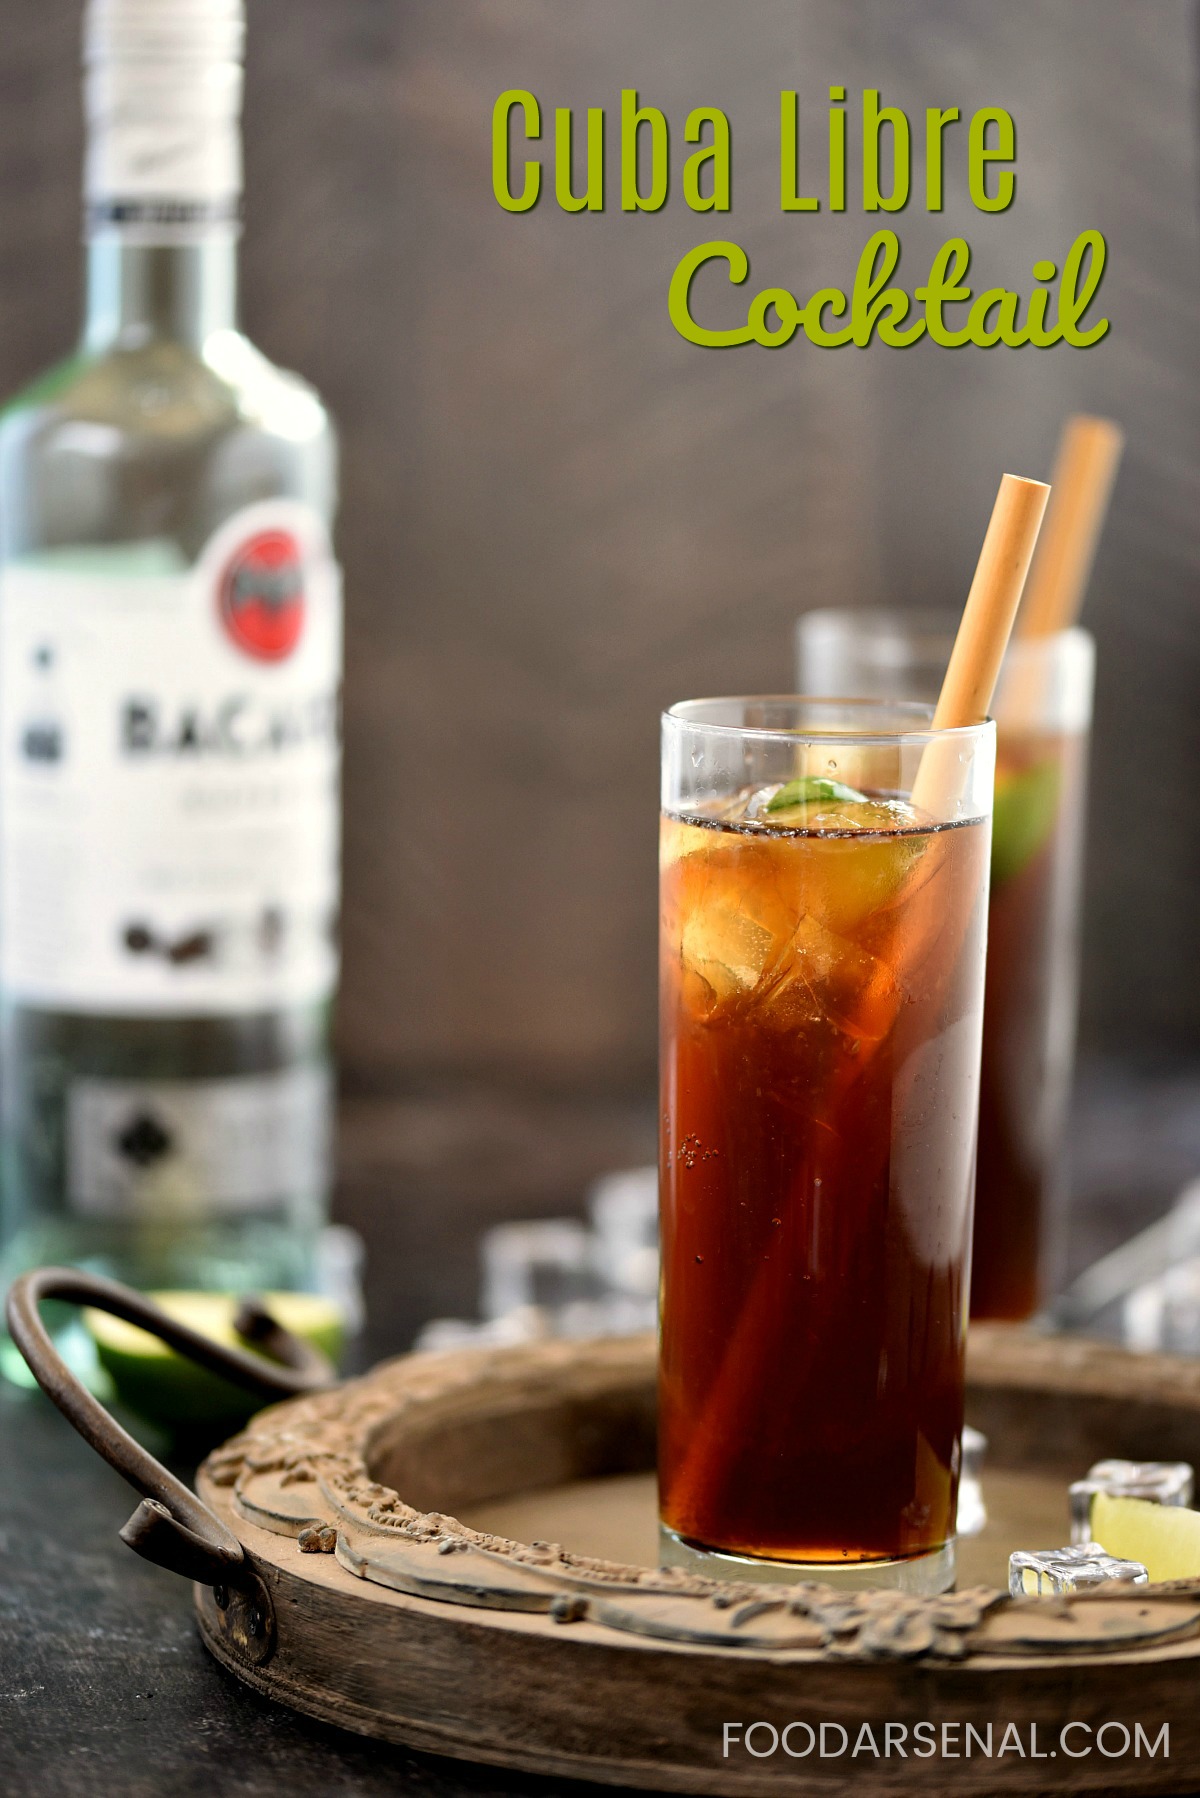 Best Cuba Libre Drink Recipe - How to Make a Cuban Rum & Coke